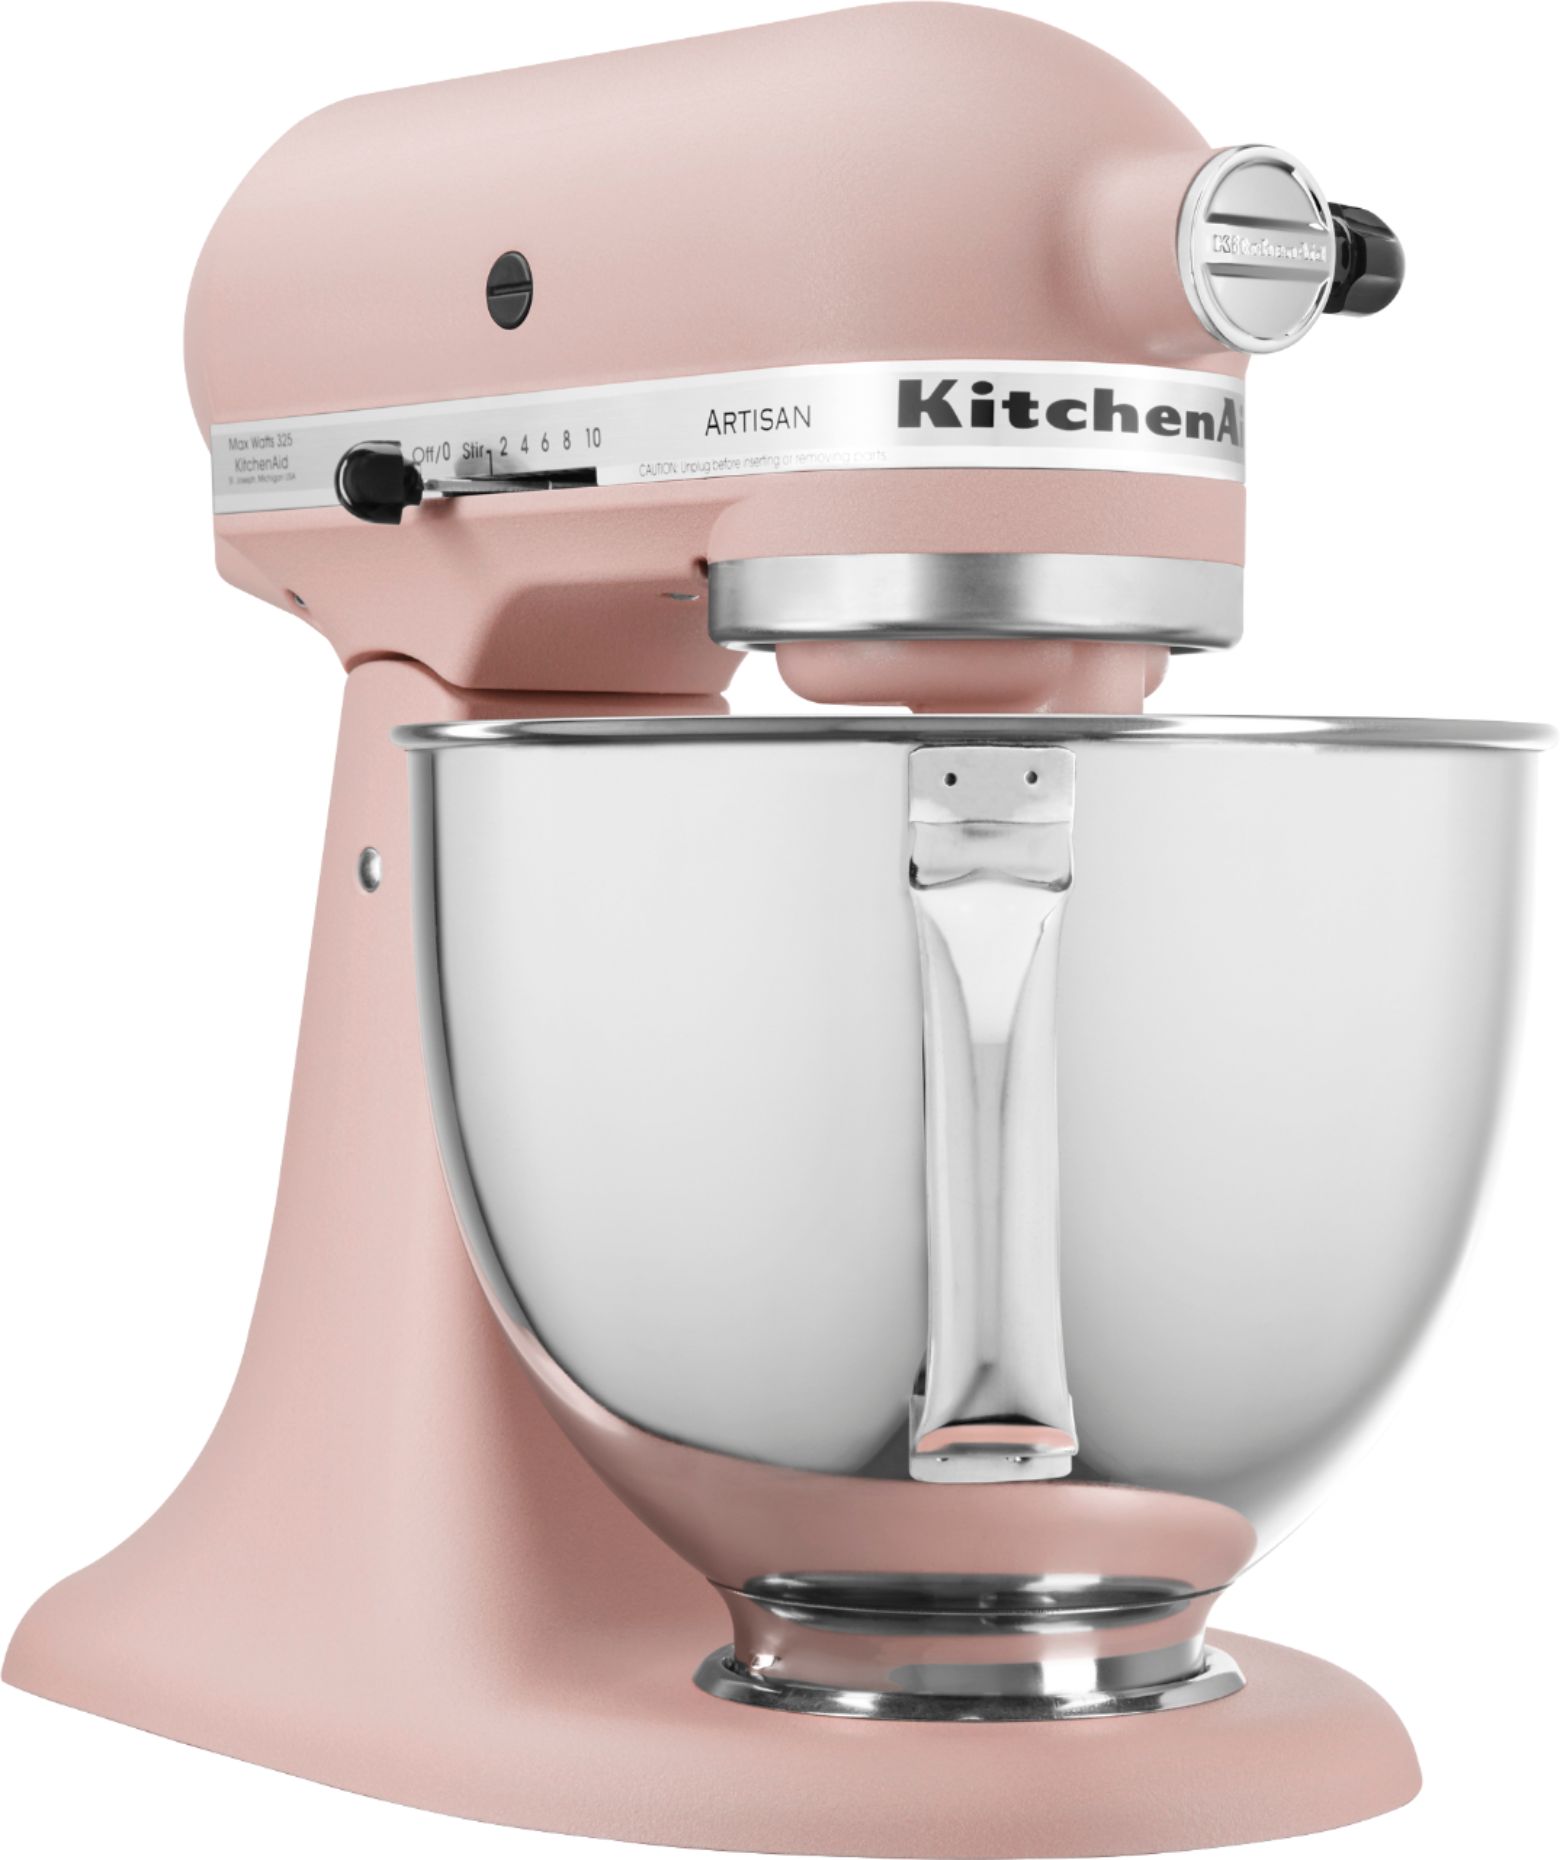 KitchenAid RRK150PK 5 Qt. Artisan Series - Pink (Used)